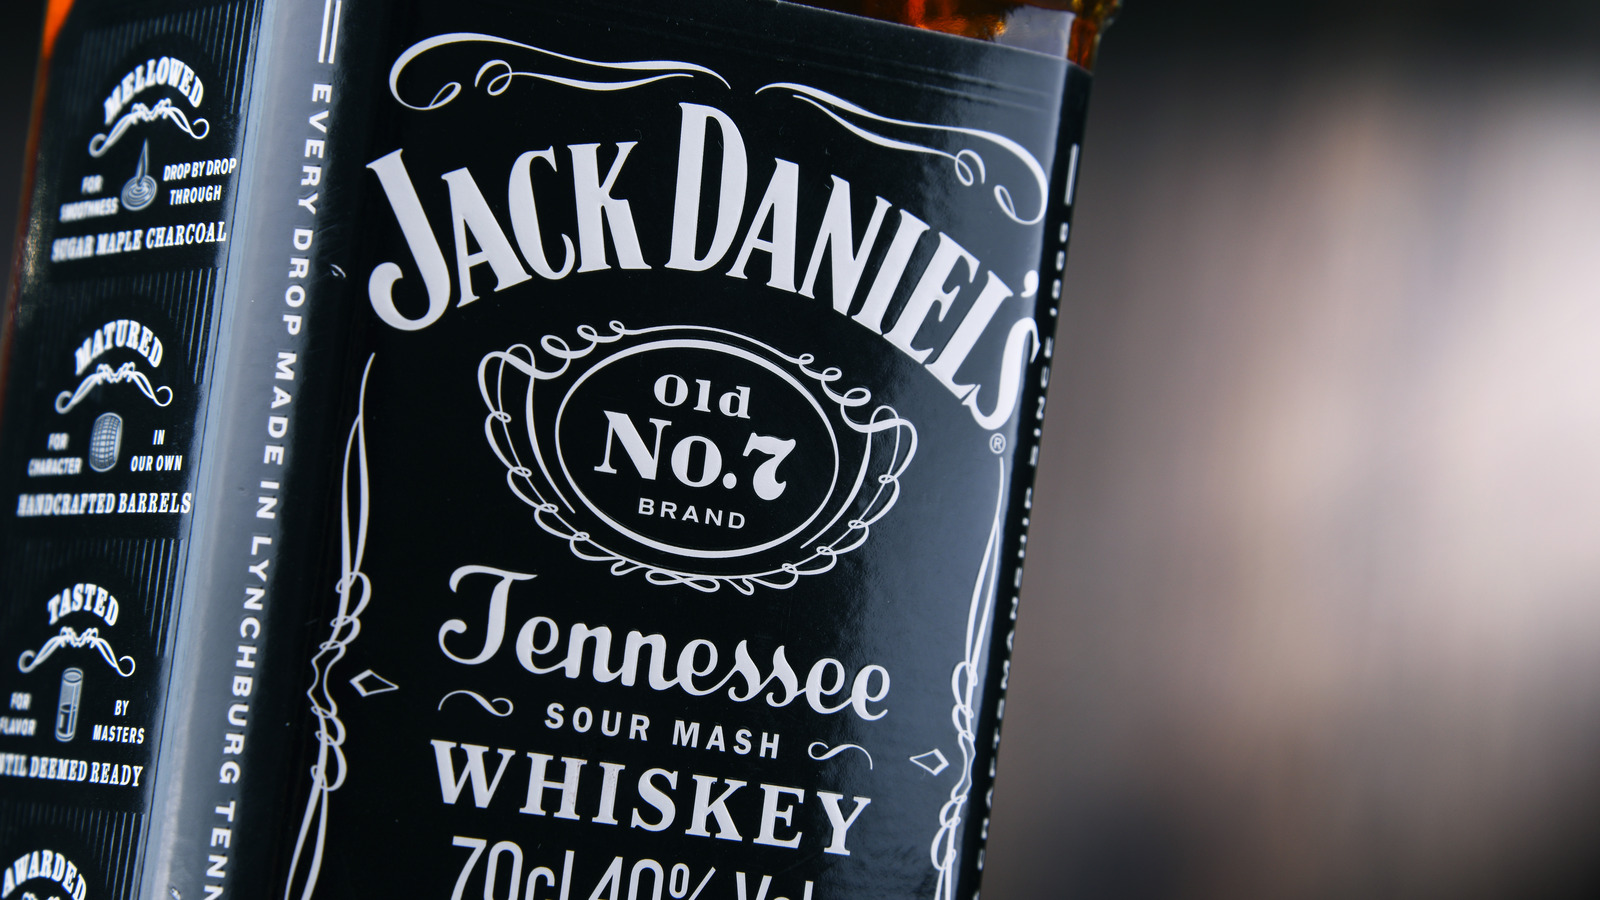 Every Jack Daniel's Whiskey Ranked! 